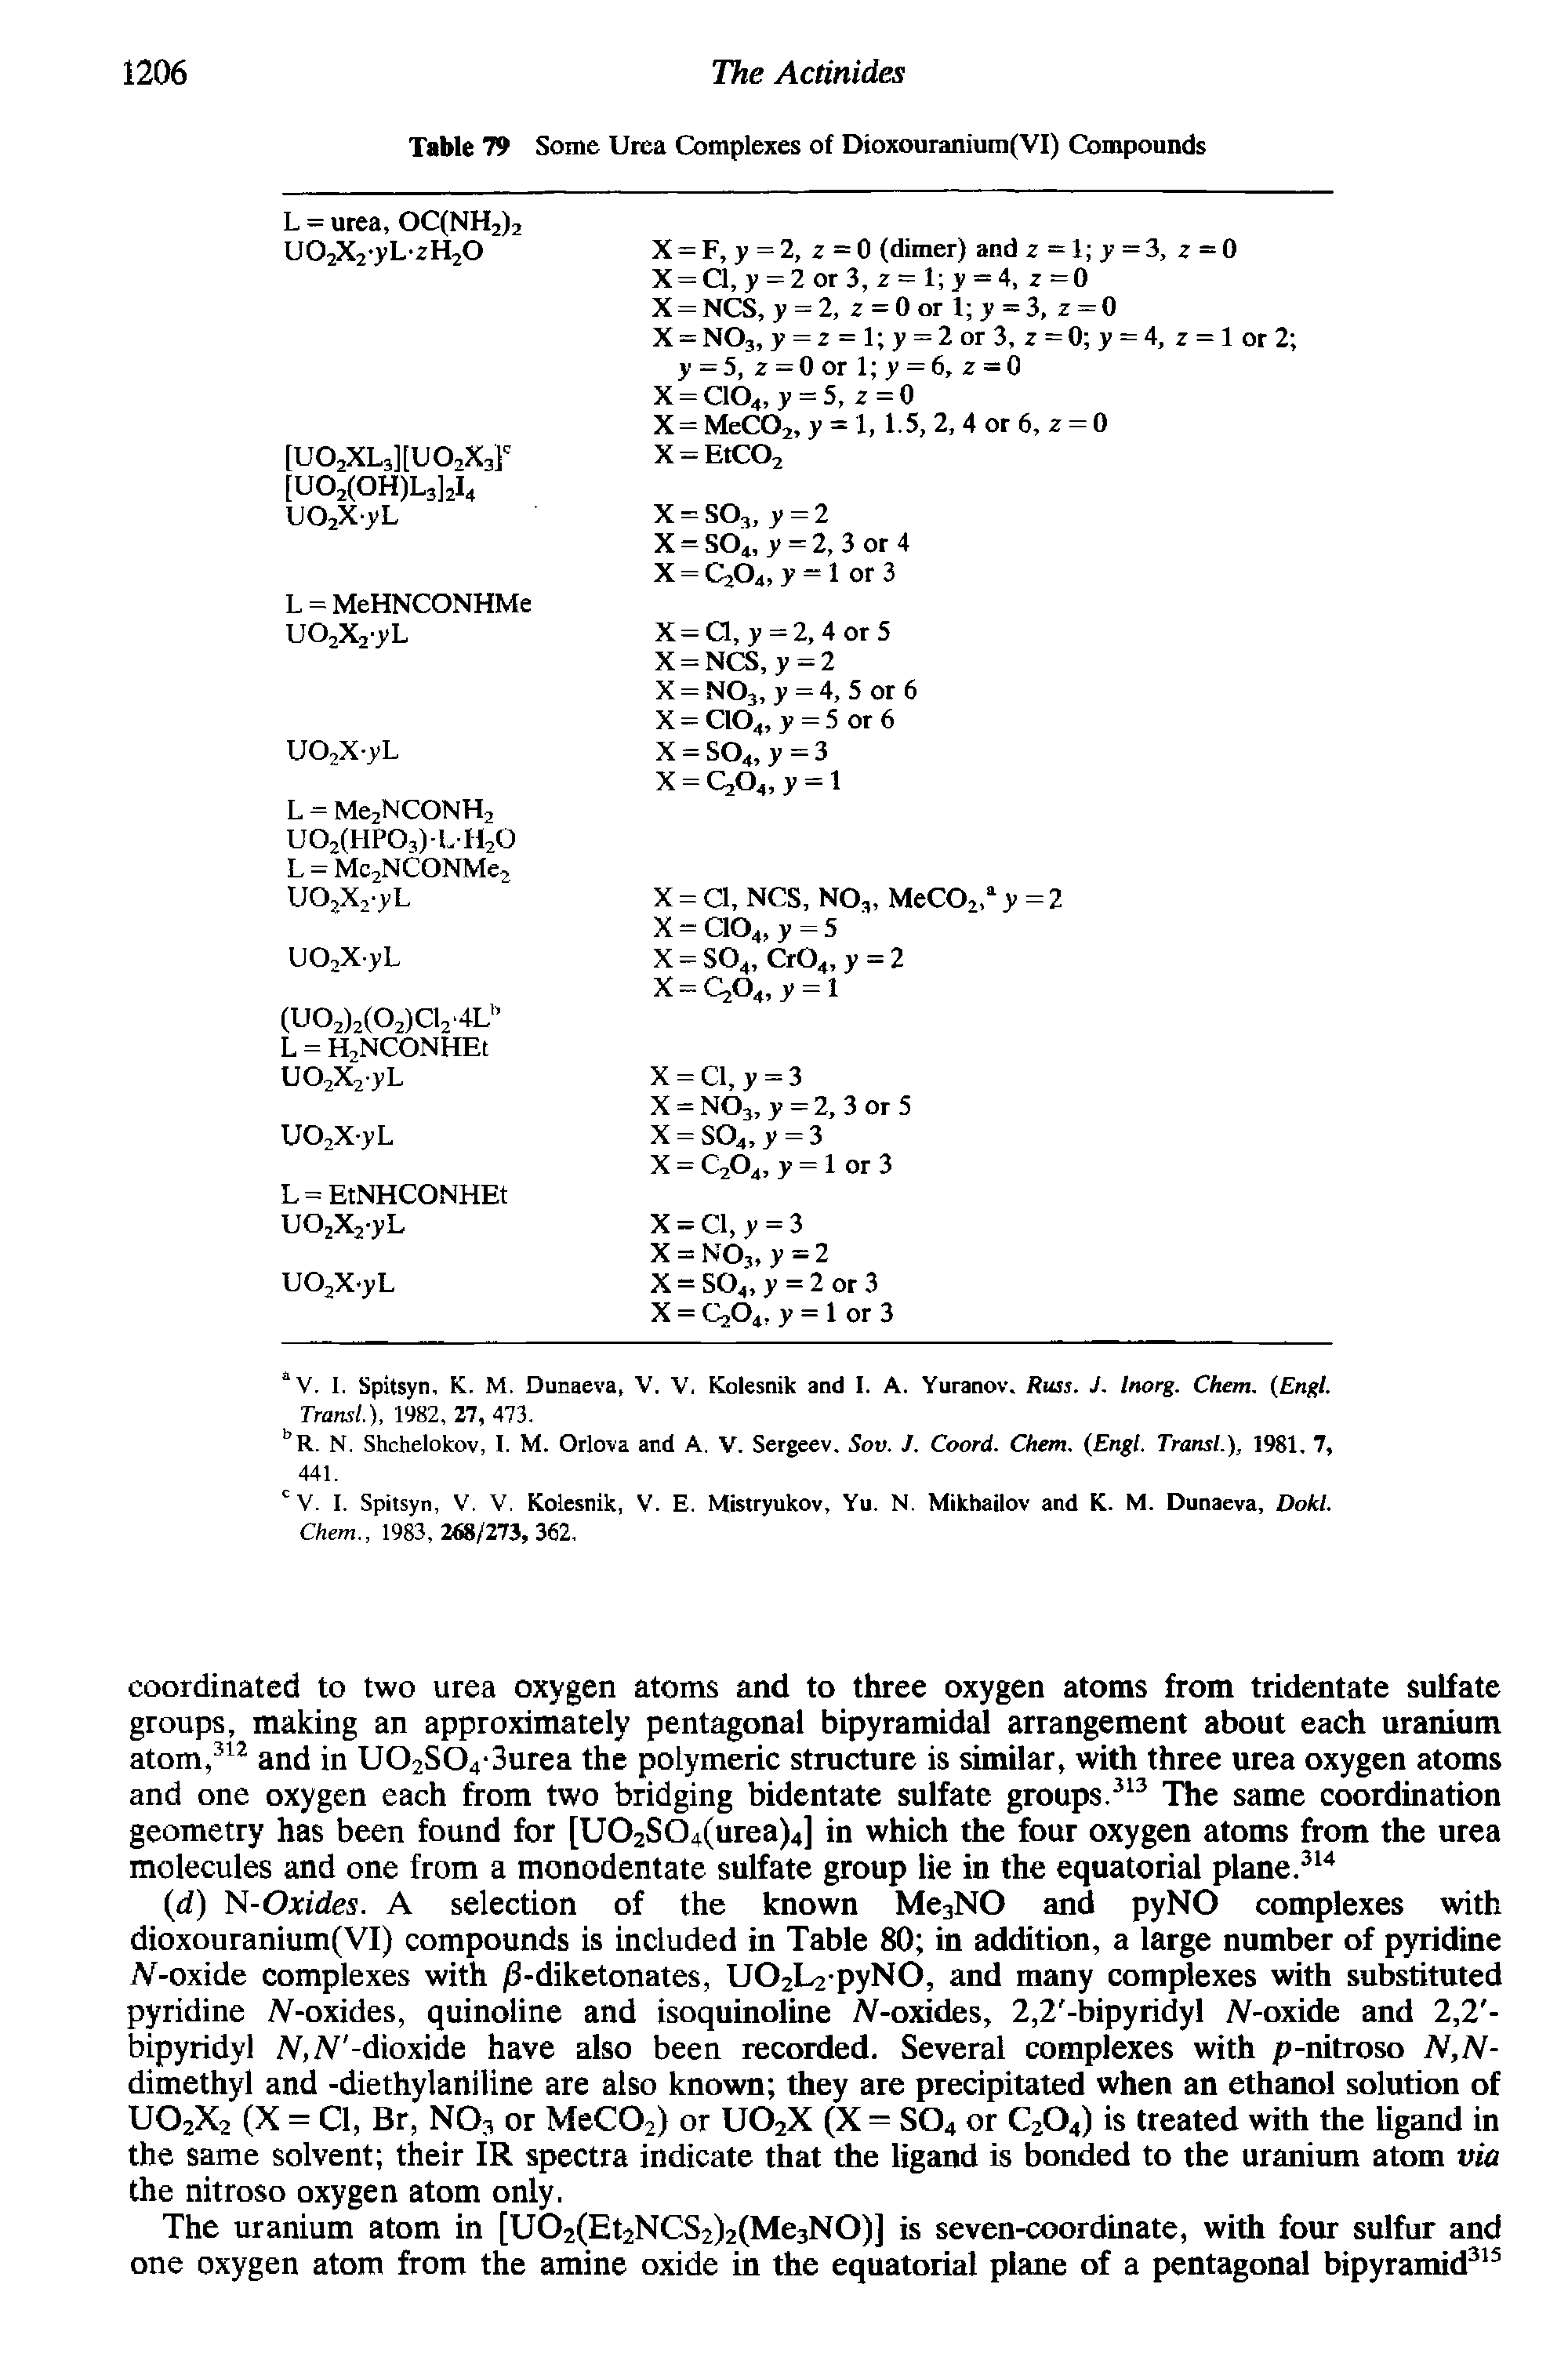 Table 79 Some Urea Complexes of Dioxouranium(VI) Compounds...